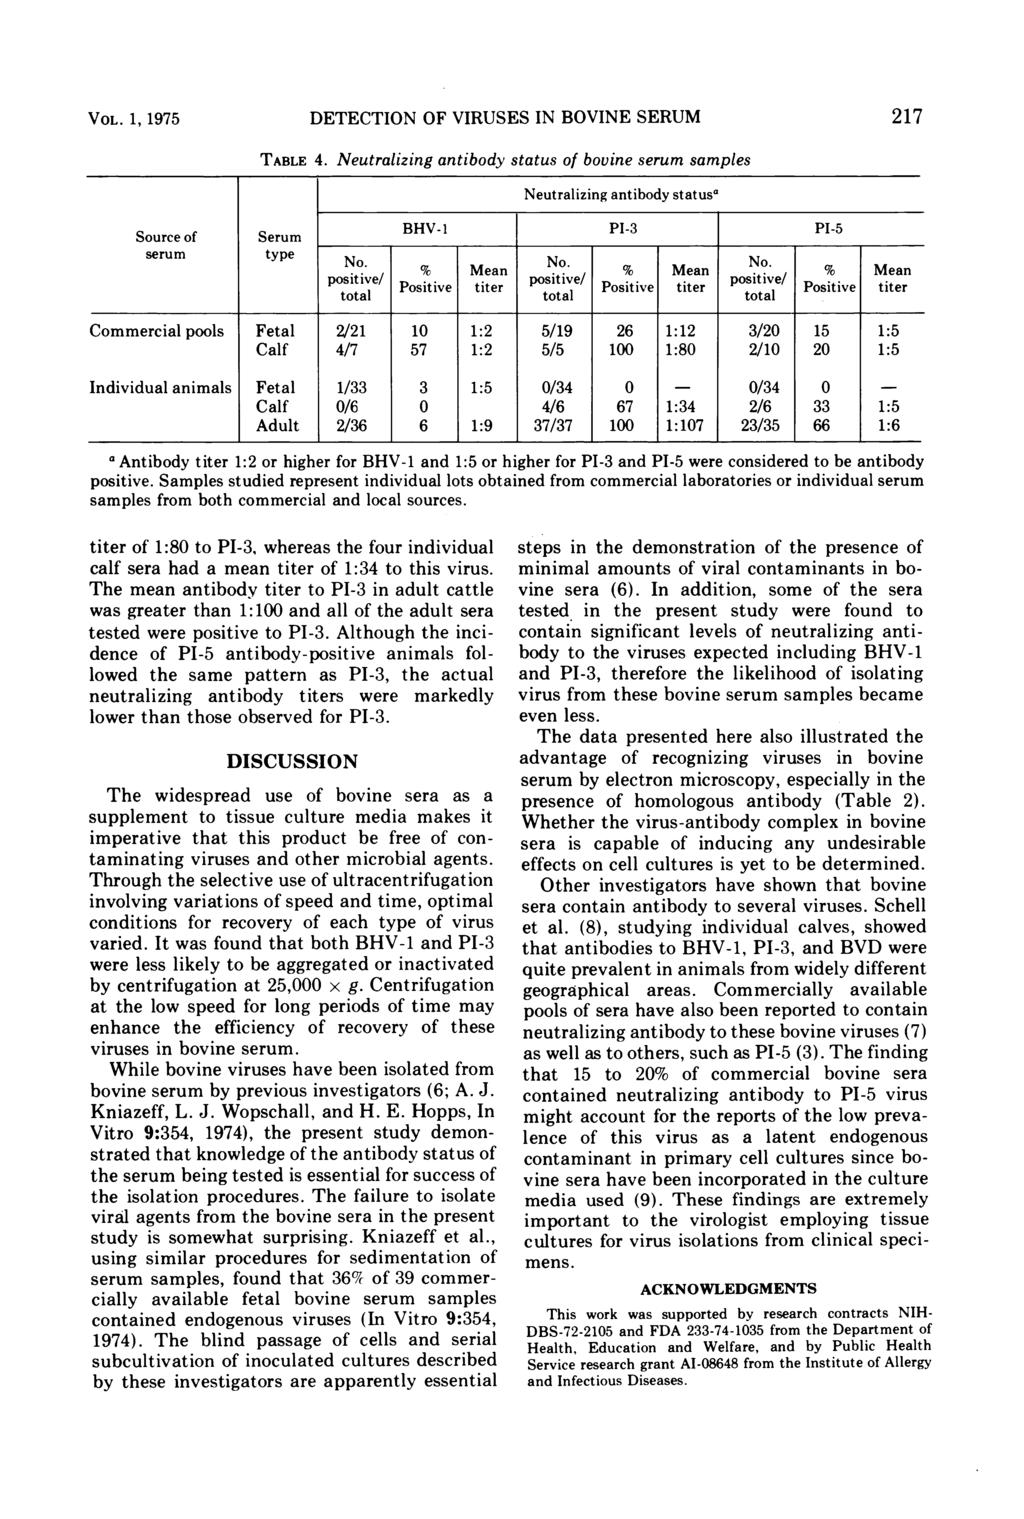 VOL. 1, 1975 TABLE 4. DETECTION OF VIRUSES IN BOVINE SERUM Neutralizing antibody status of bovine serum samples Neutralizing antibody statusa Source of Serum BHV-1 PI-3 PI-5 serum type No. % Mean No.